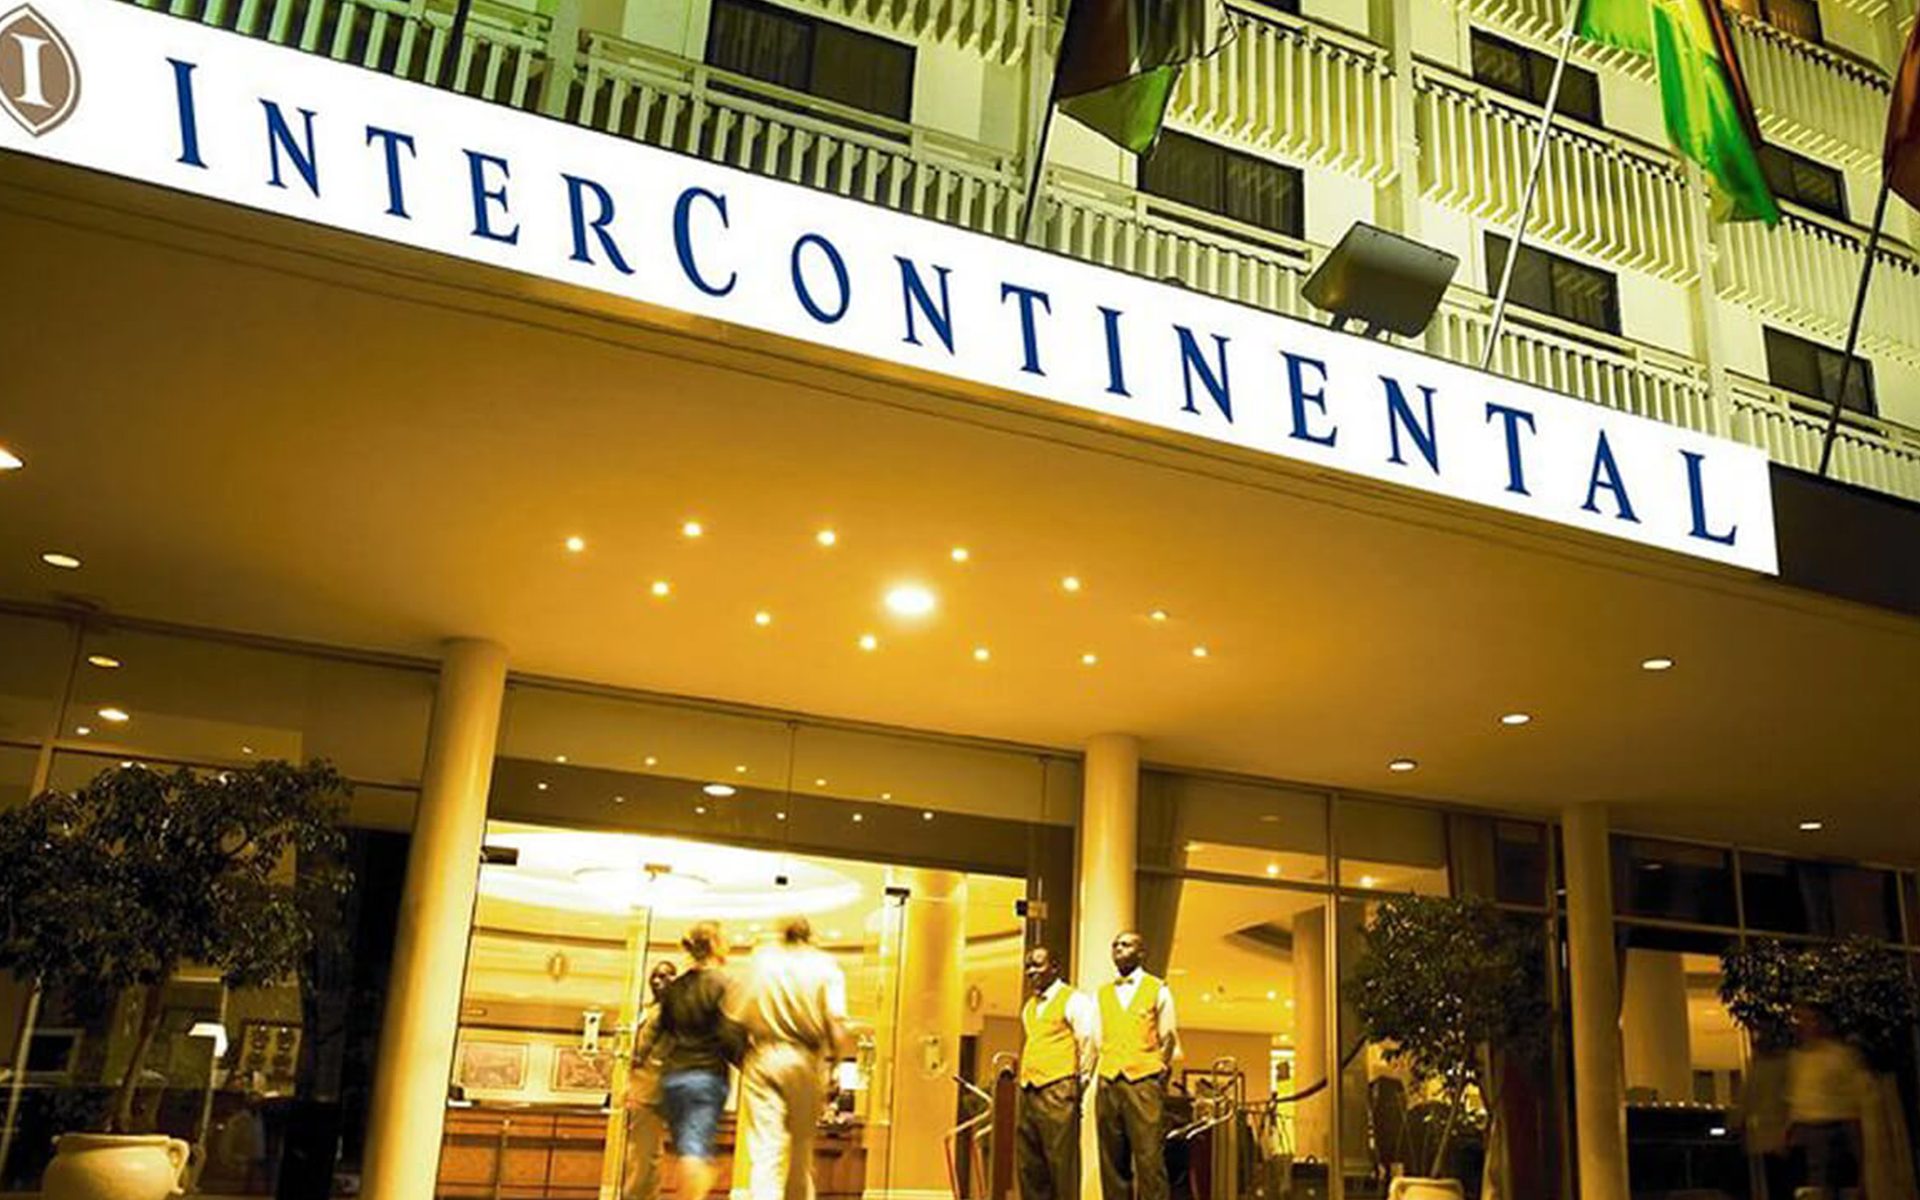 InterContinental hotel